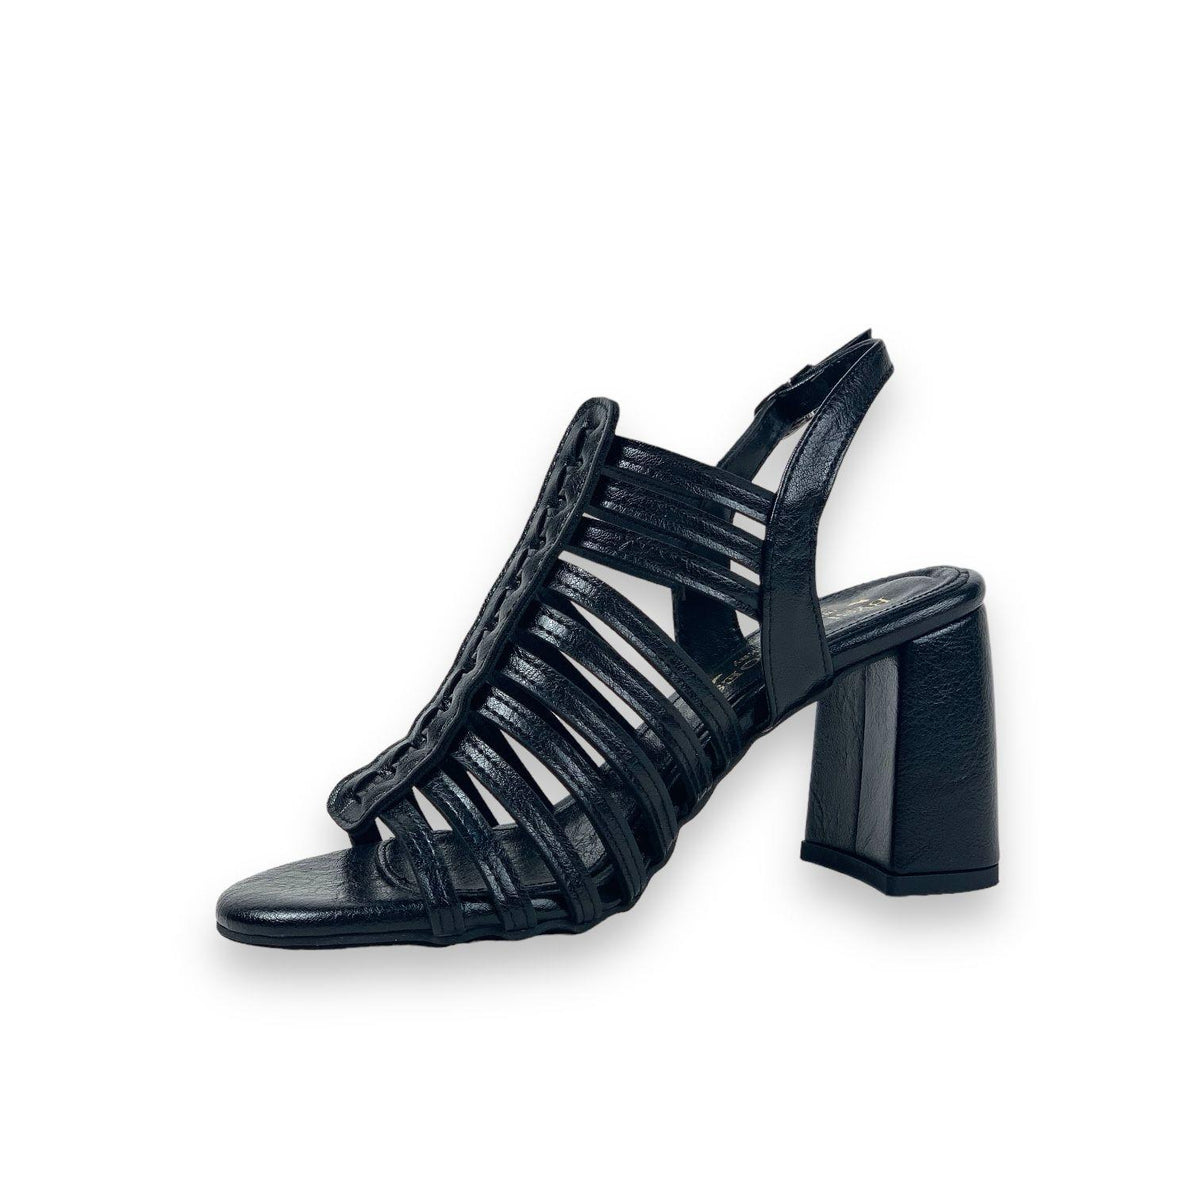 Women's Pert Black Thick High Heel Shoes Sandals 9 cm - STREETMODE™